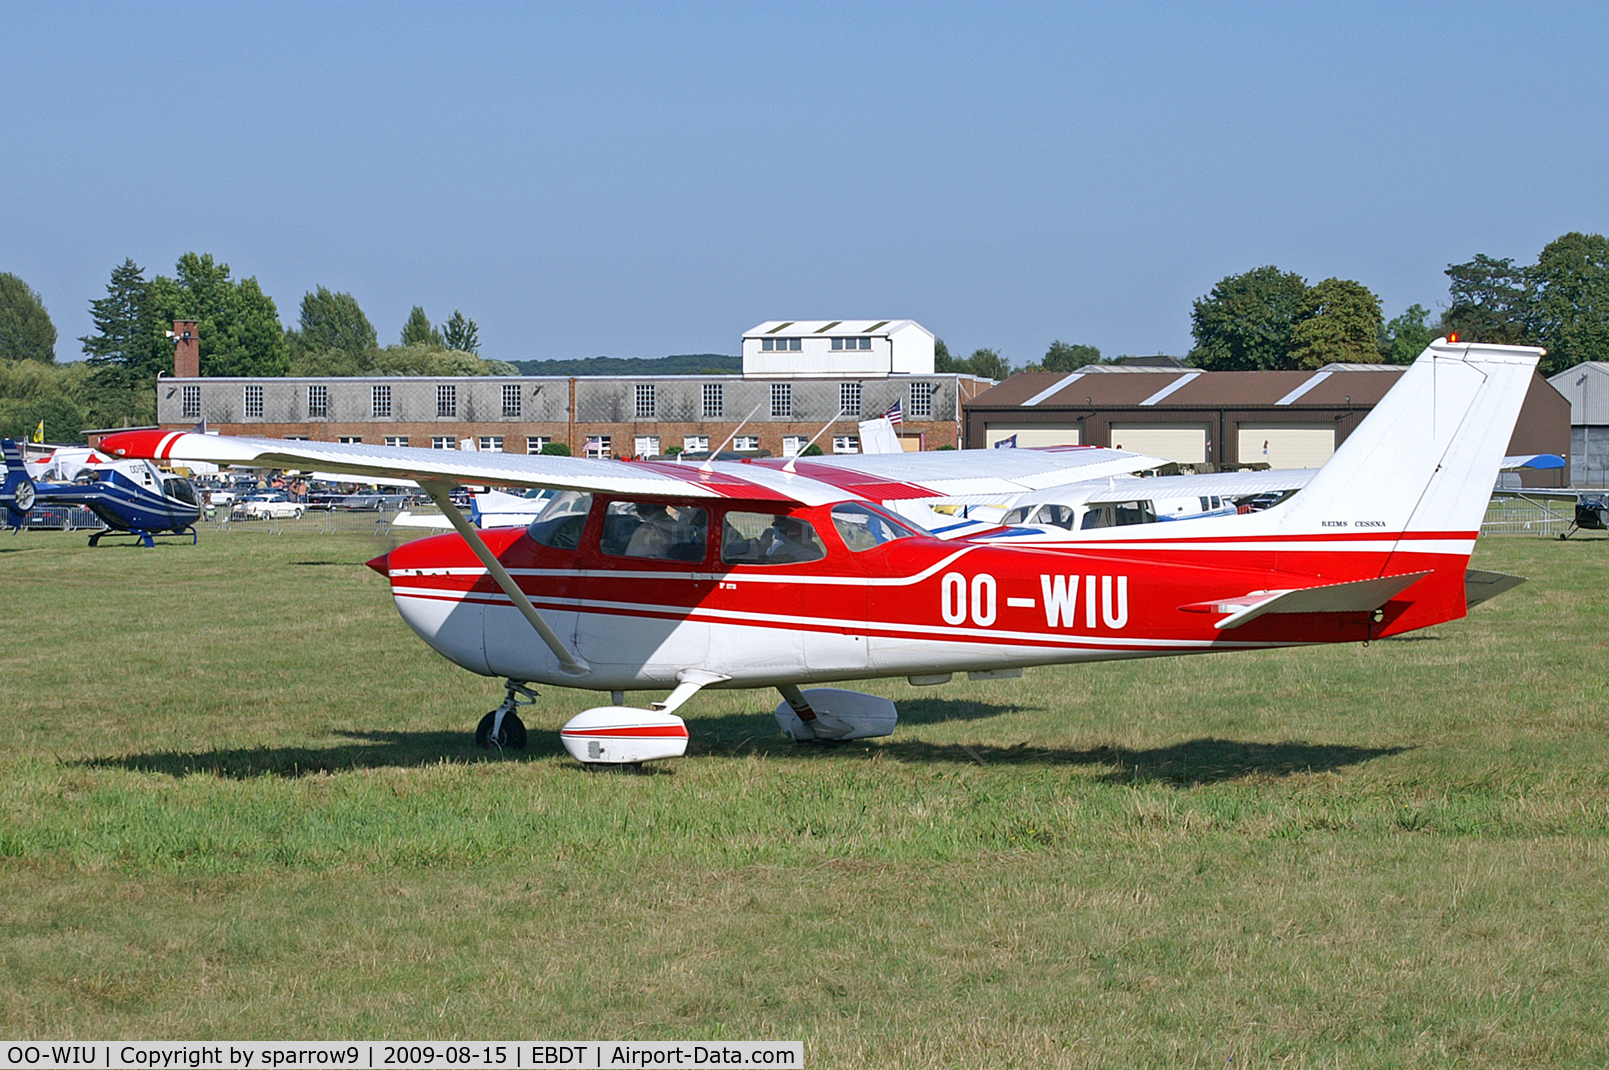 OO-WIU, 1972 Reims F172M Skyhawk Skyhawk C/N 0912, Schaffen-Diest oldtimer-meeting 2009